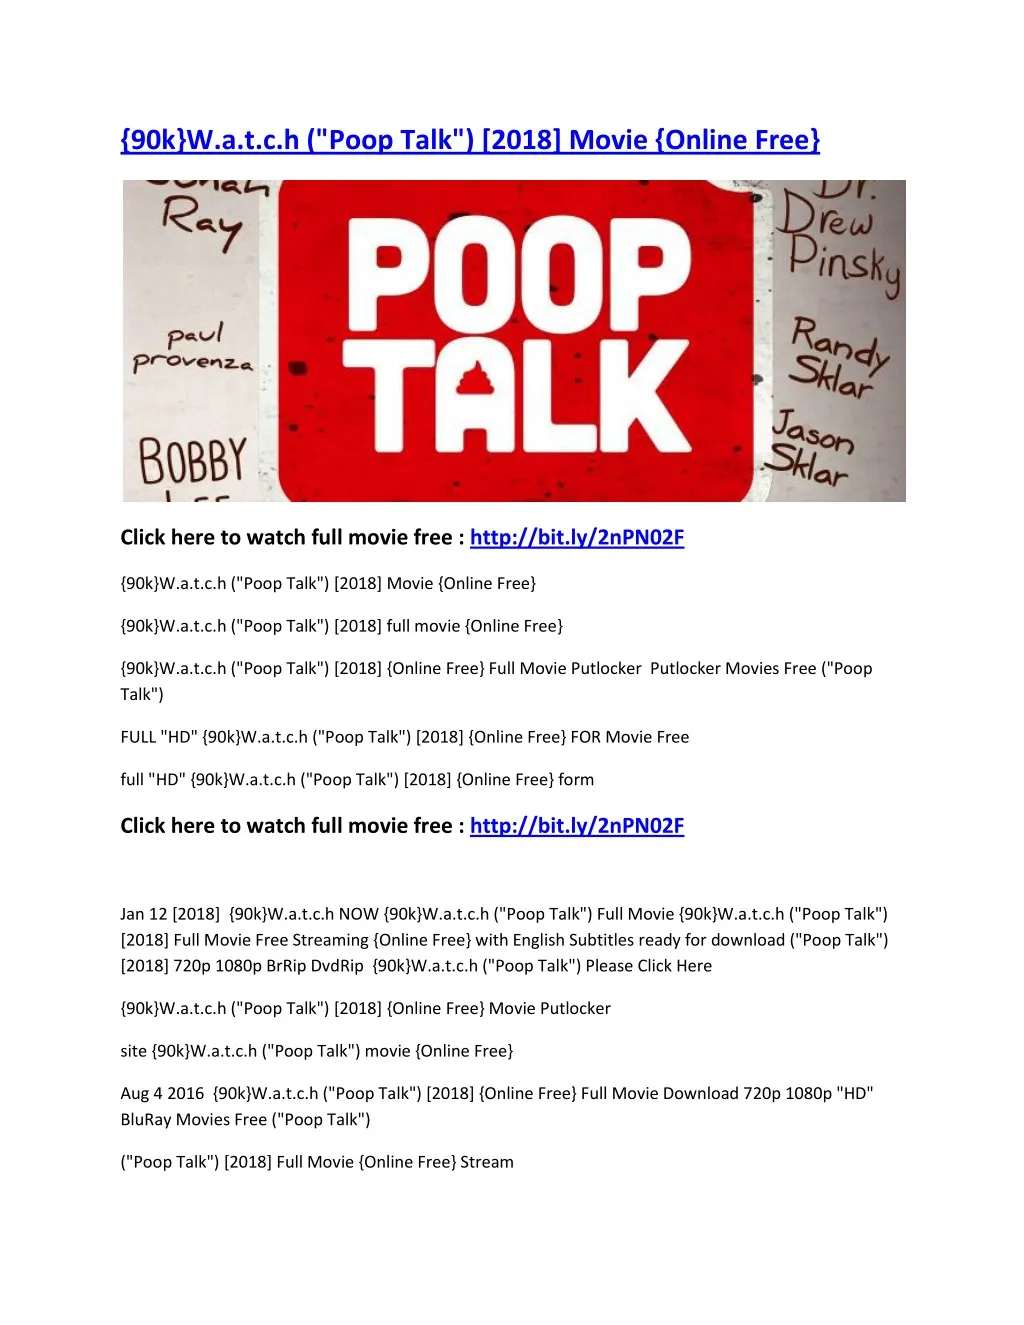 90k w a t c h poop talk 2018 movie online free